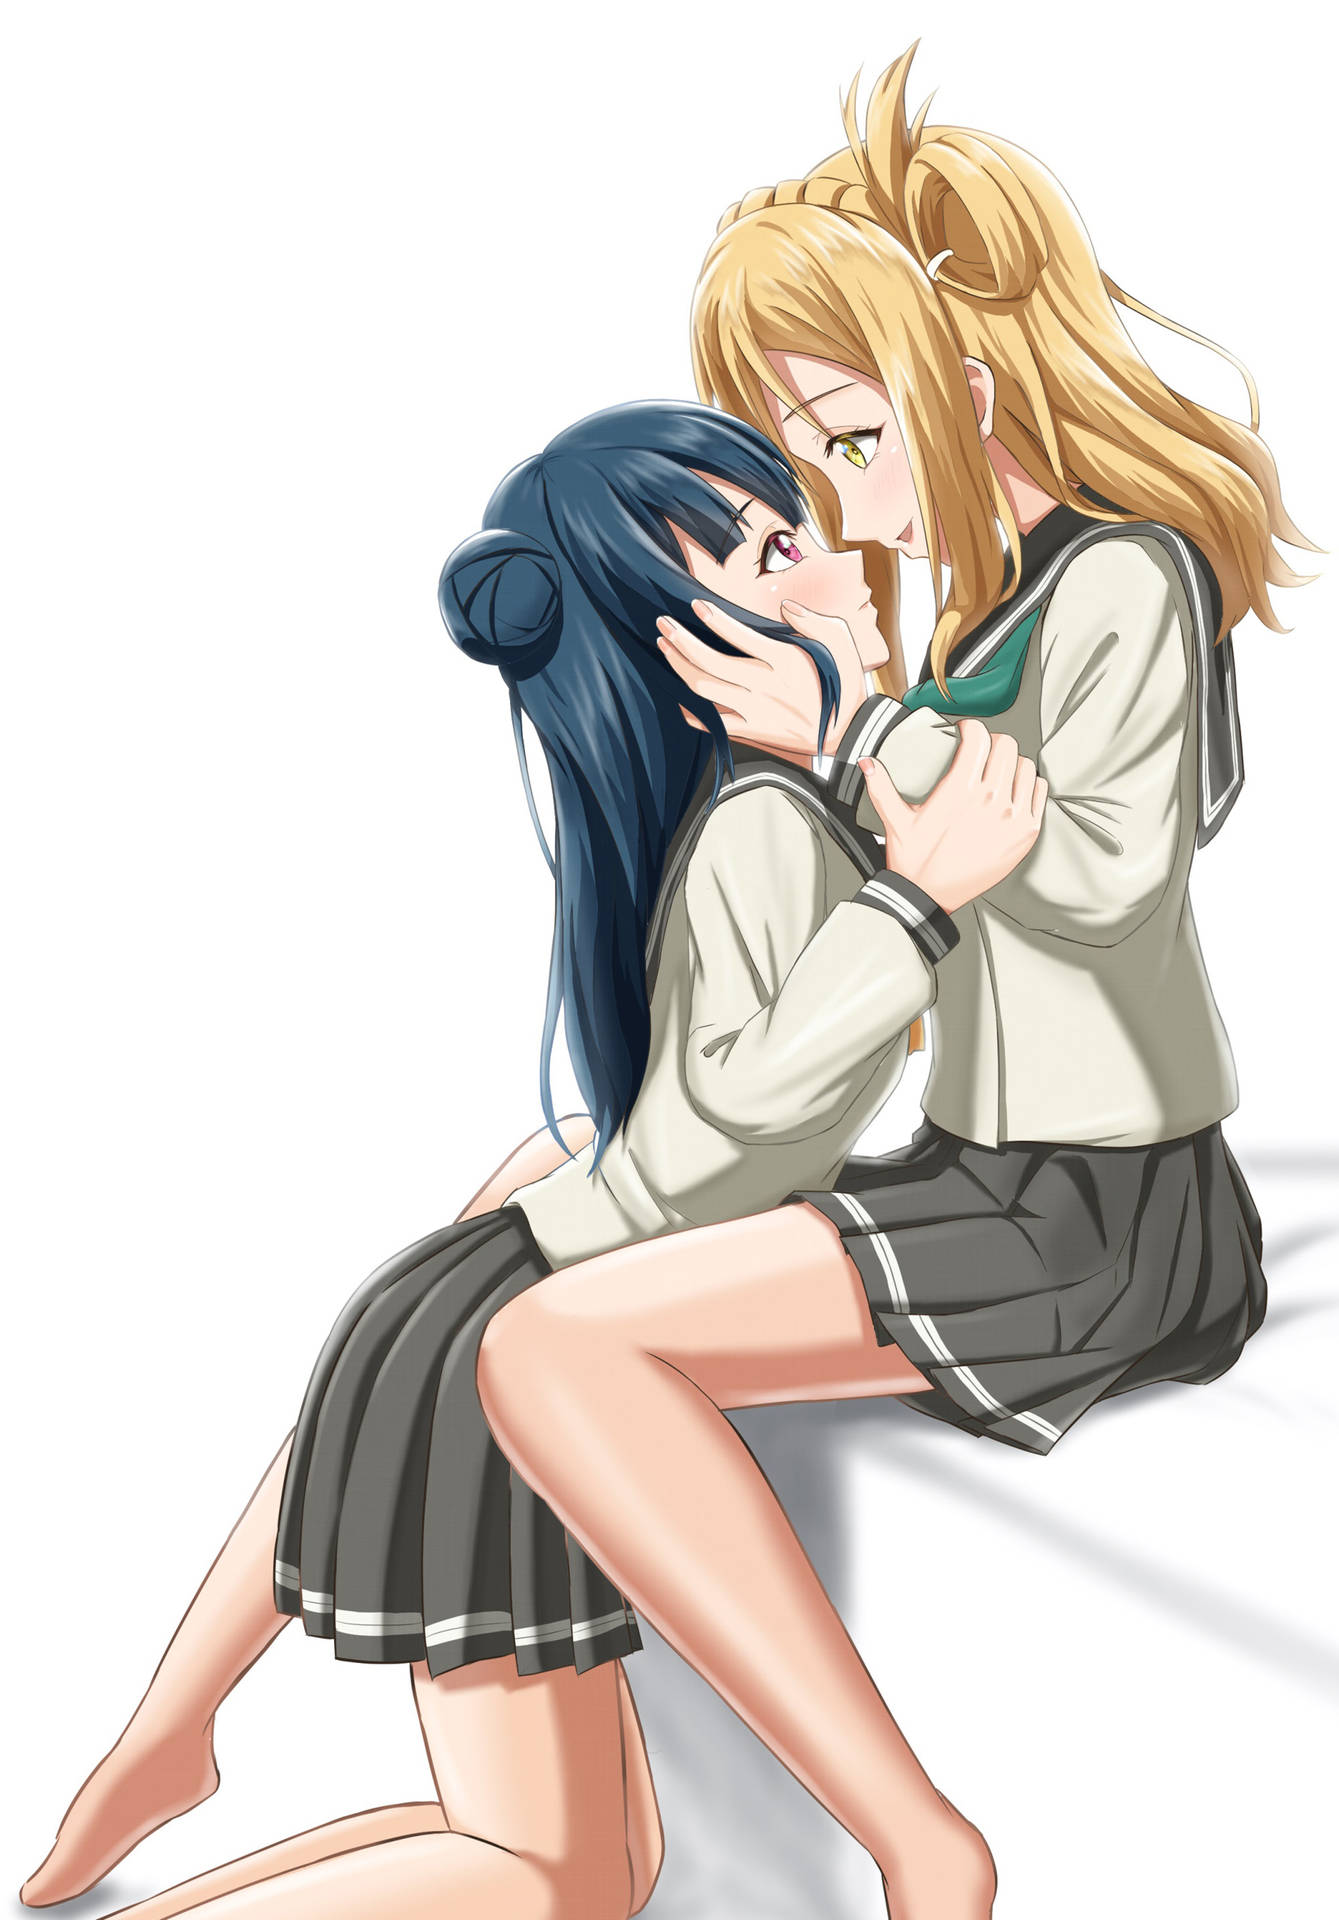 Amorous Anime Lesbian Couple